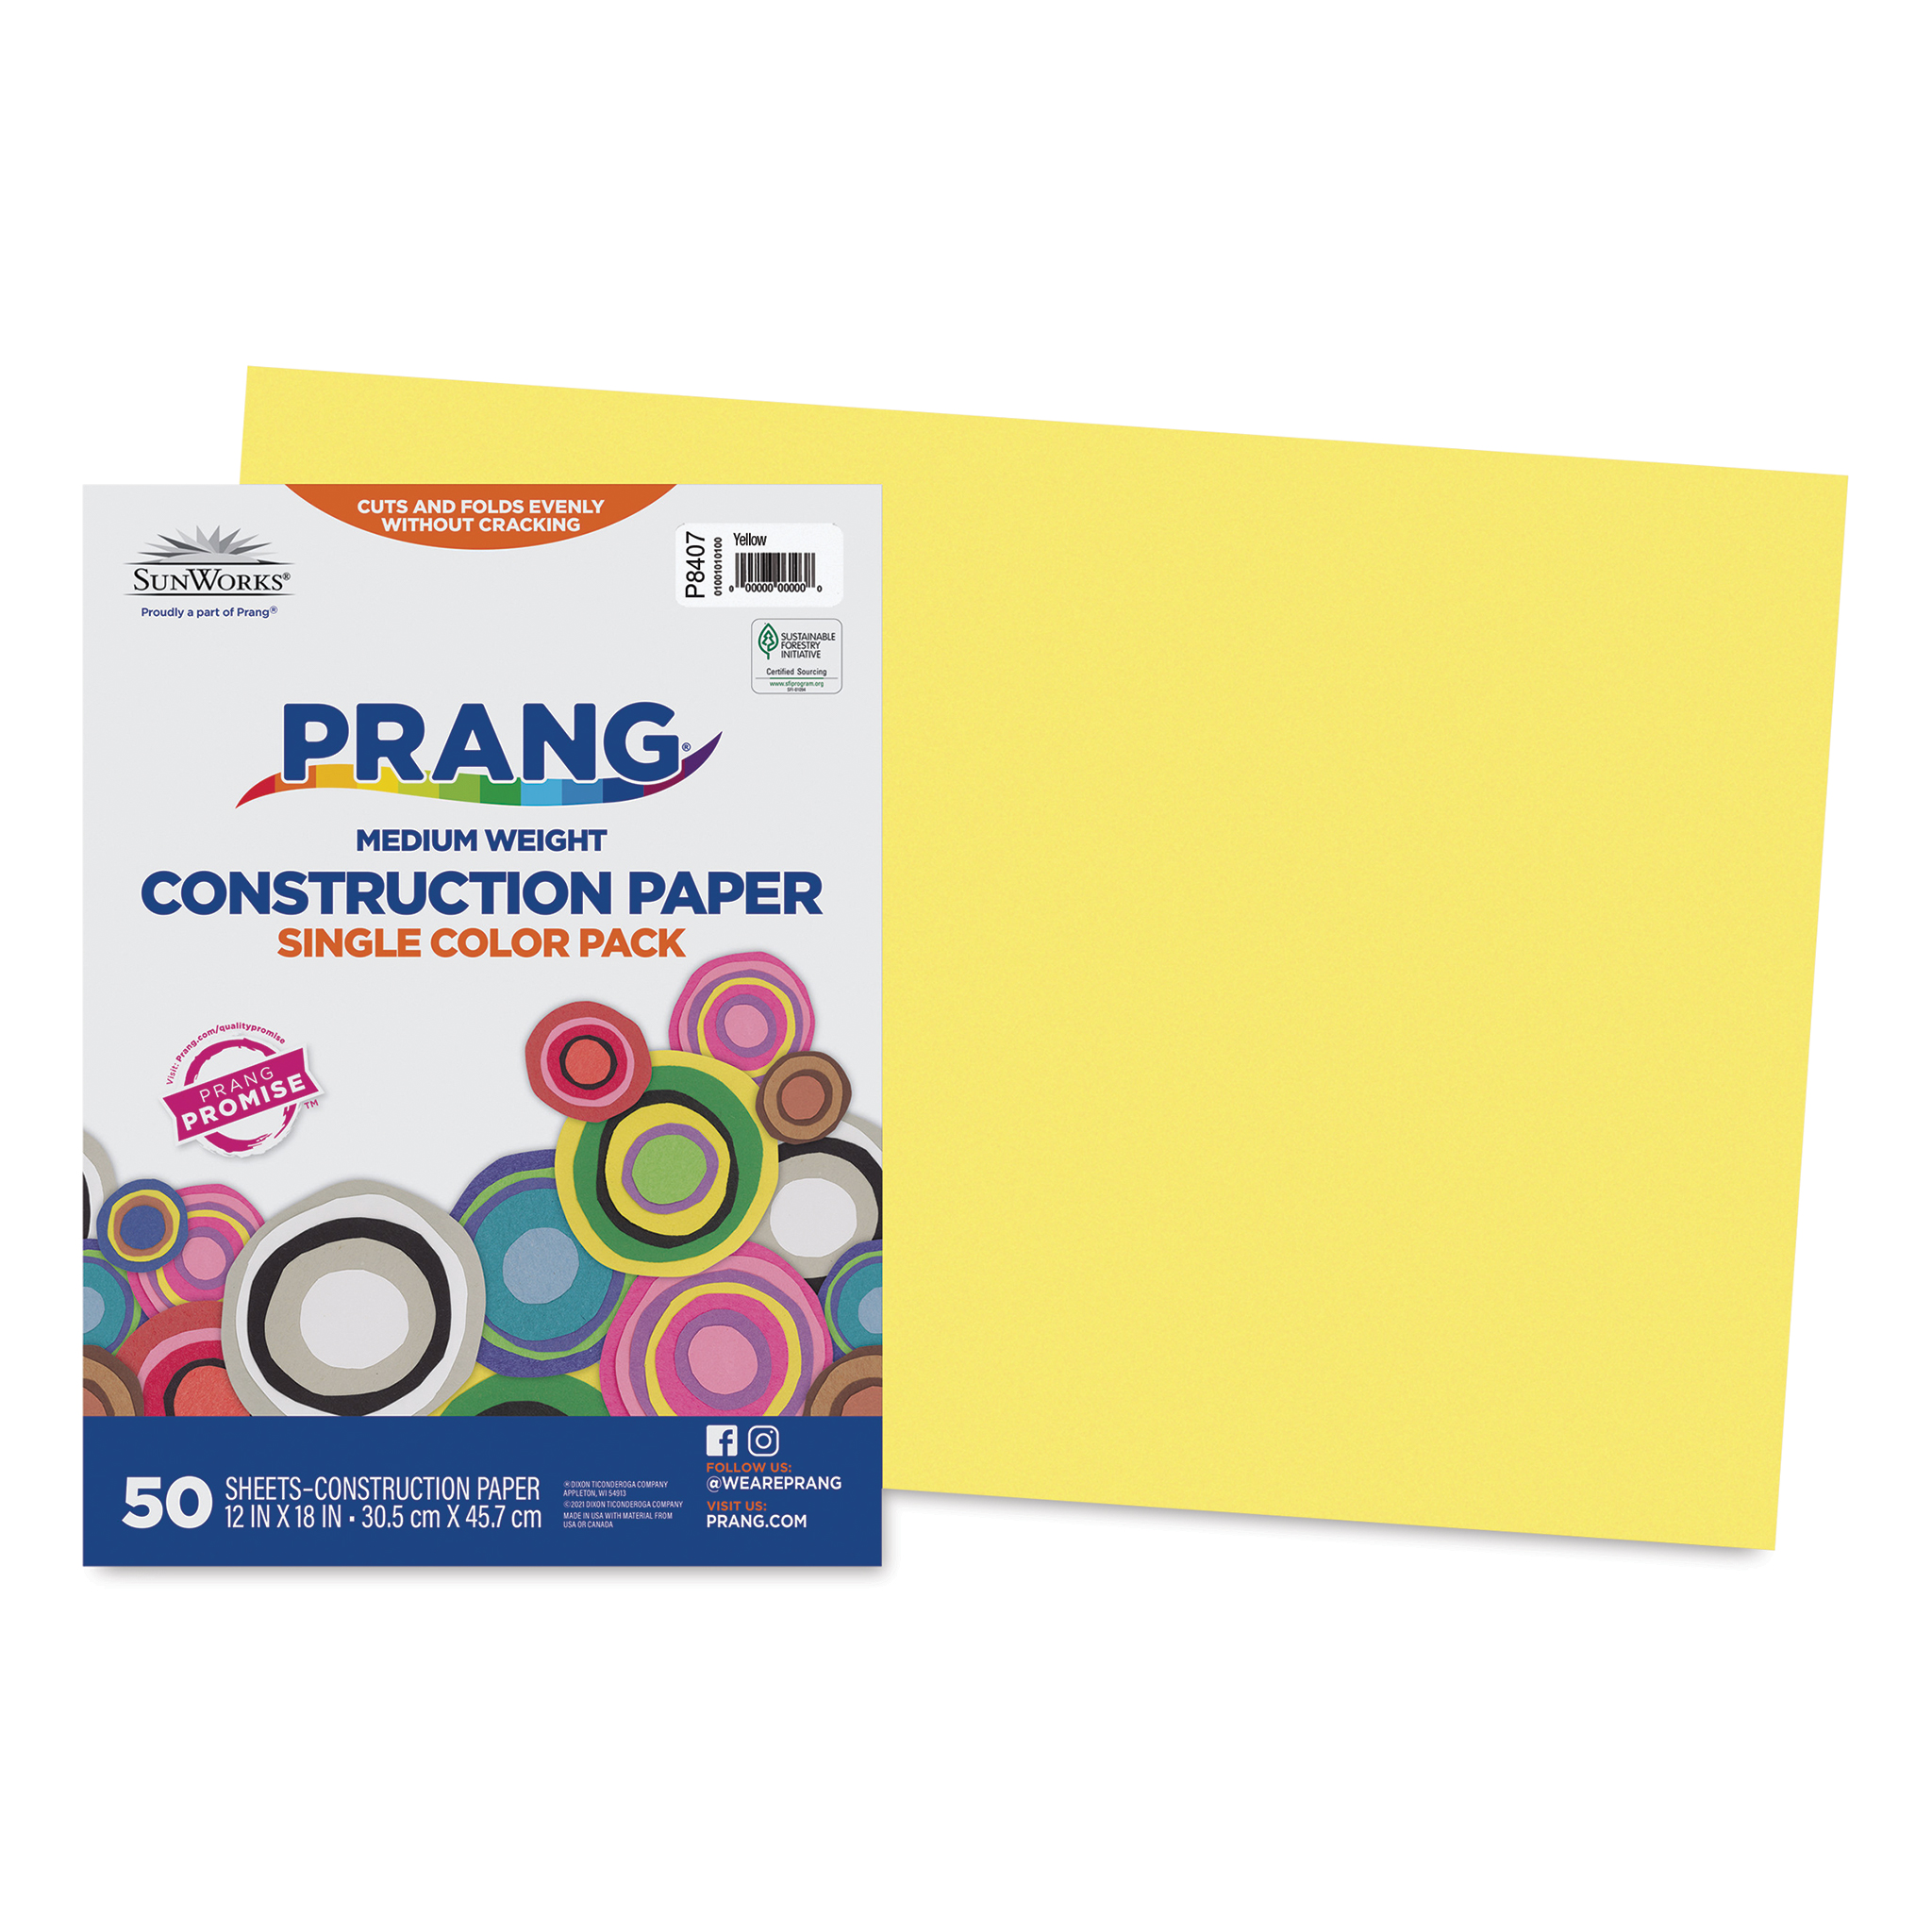 SunWorks Construction Paper, 58lb, 12 x 18, Yellow, 50/Pack